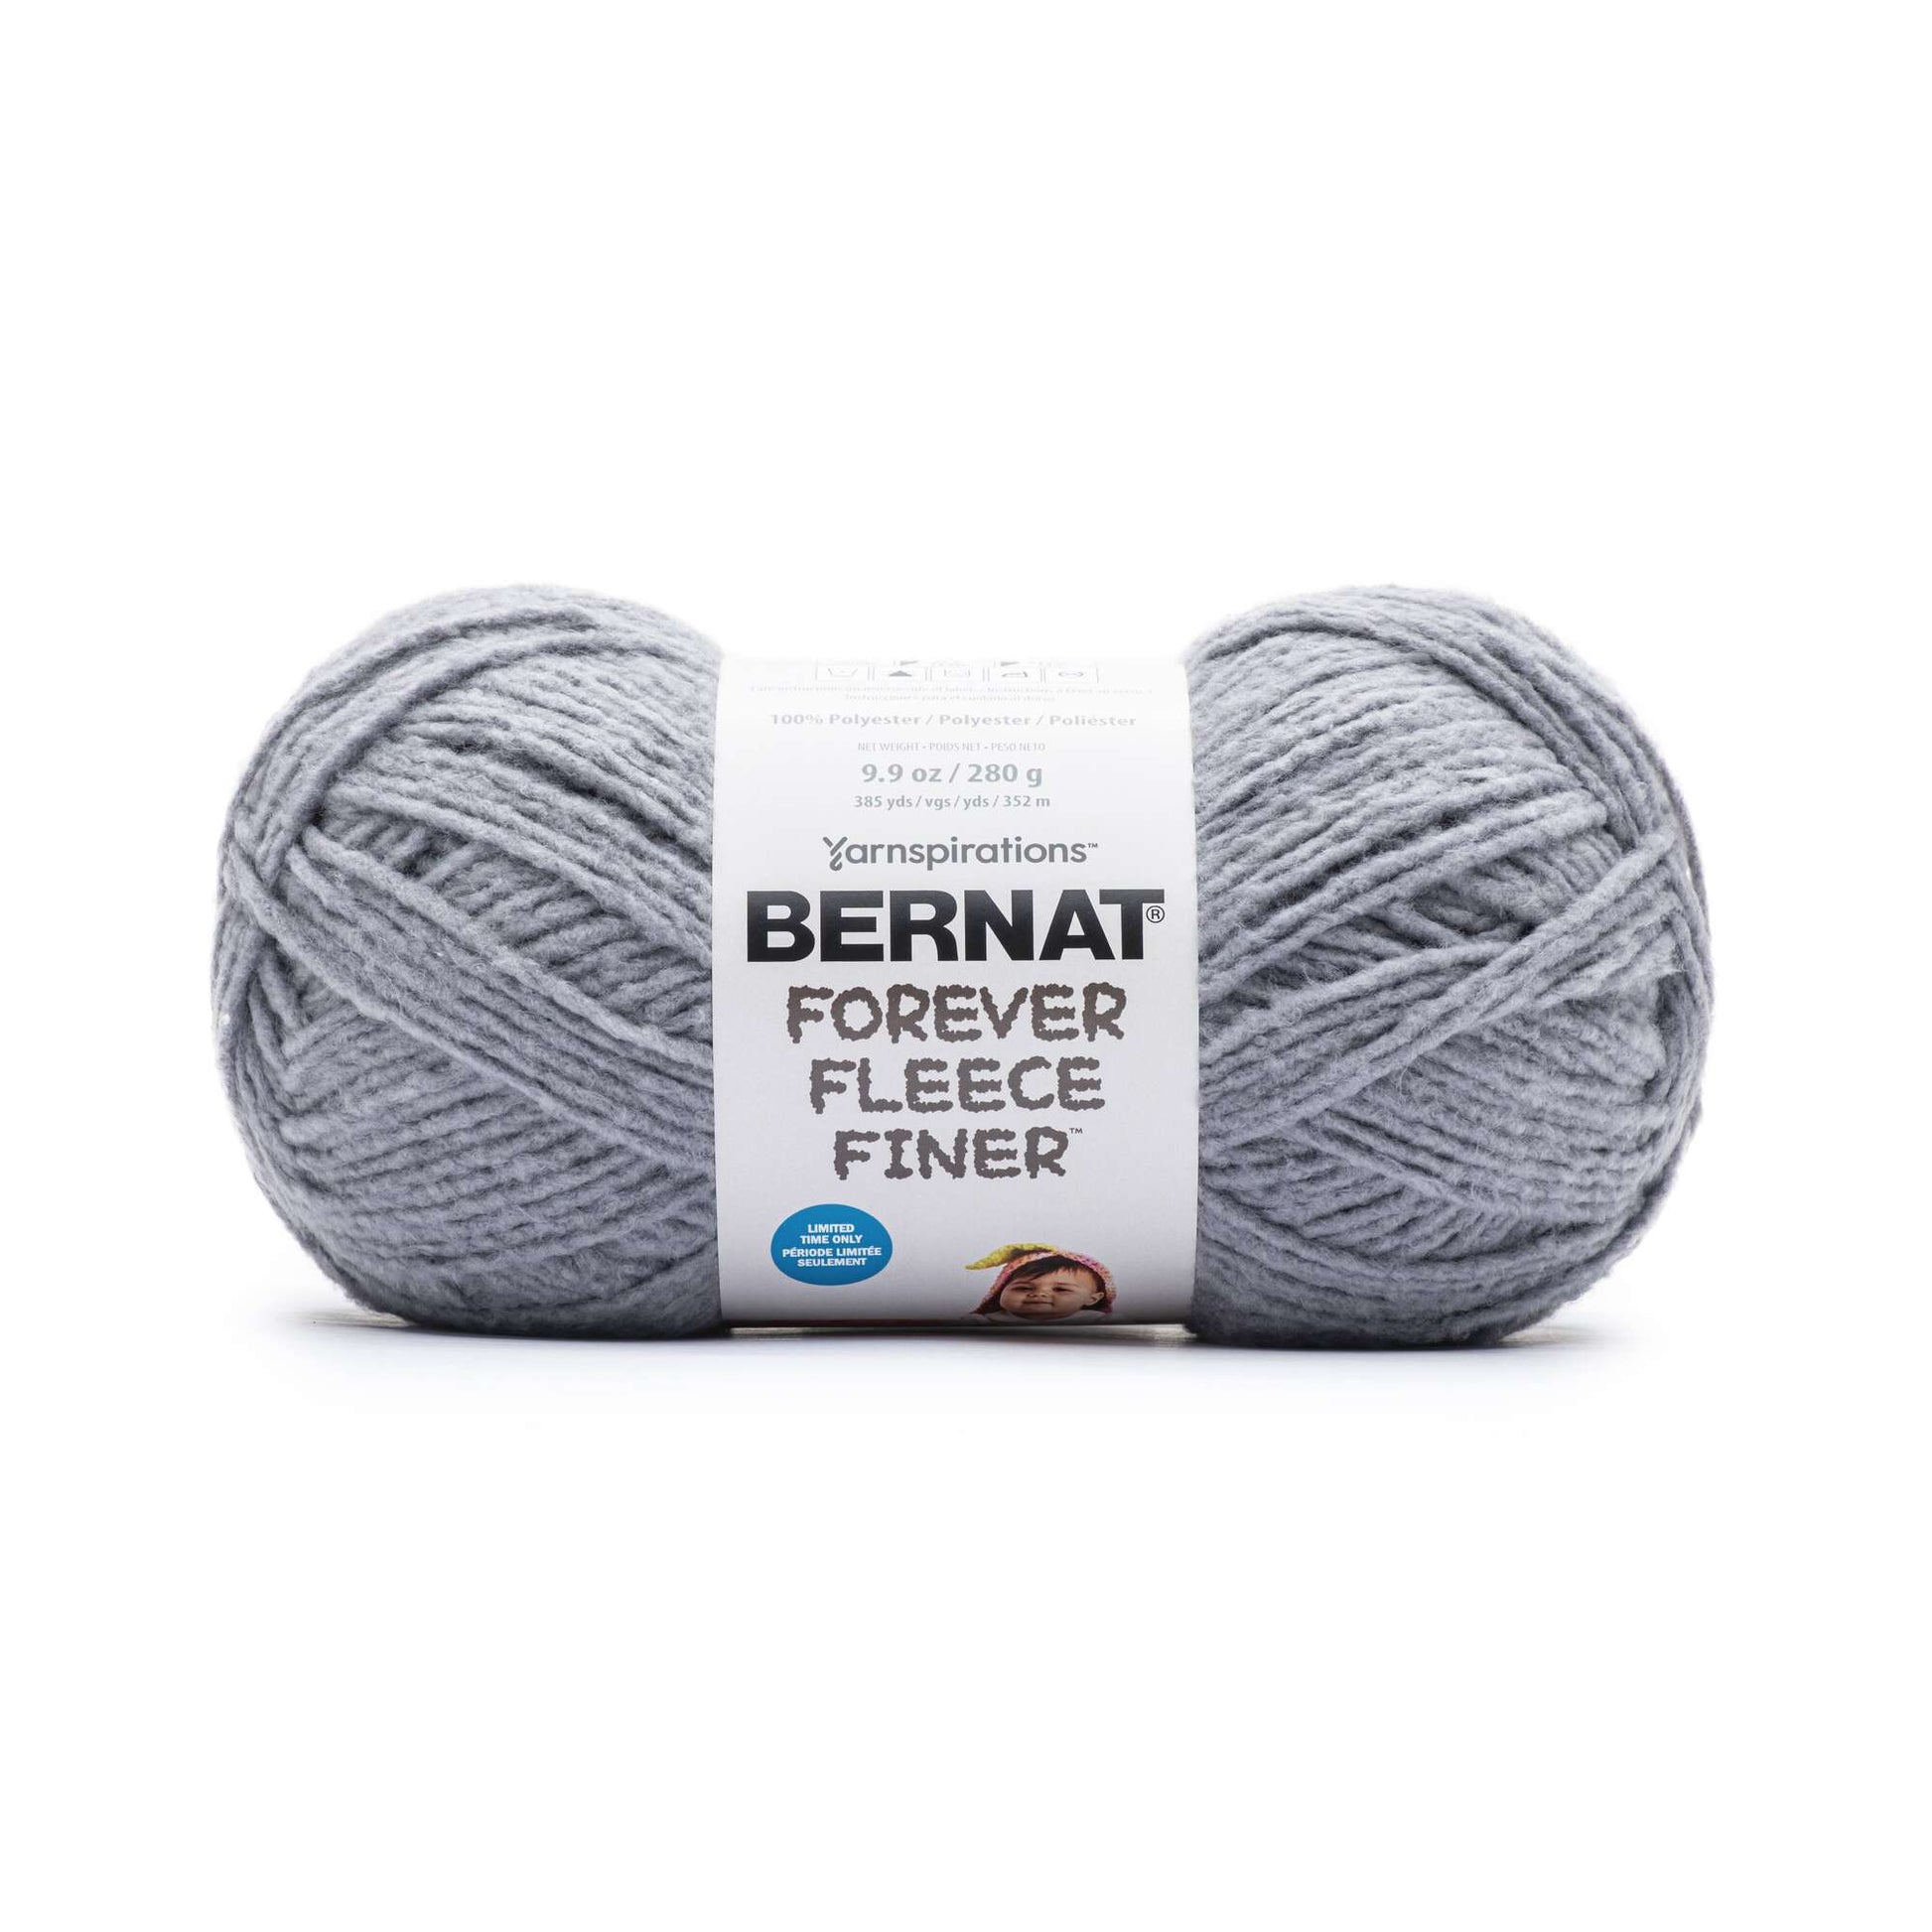 Bernat Forever Fleece Finer Yarn - Discontinued Shades Pebble